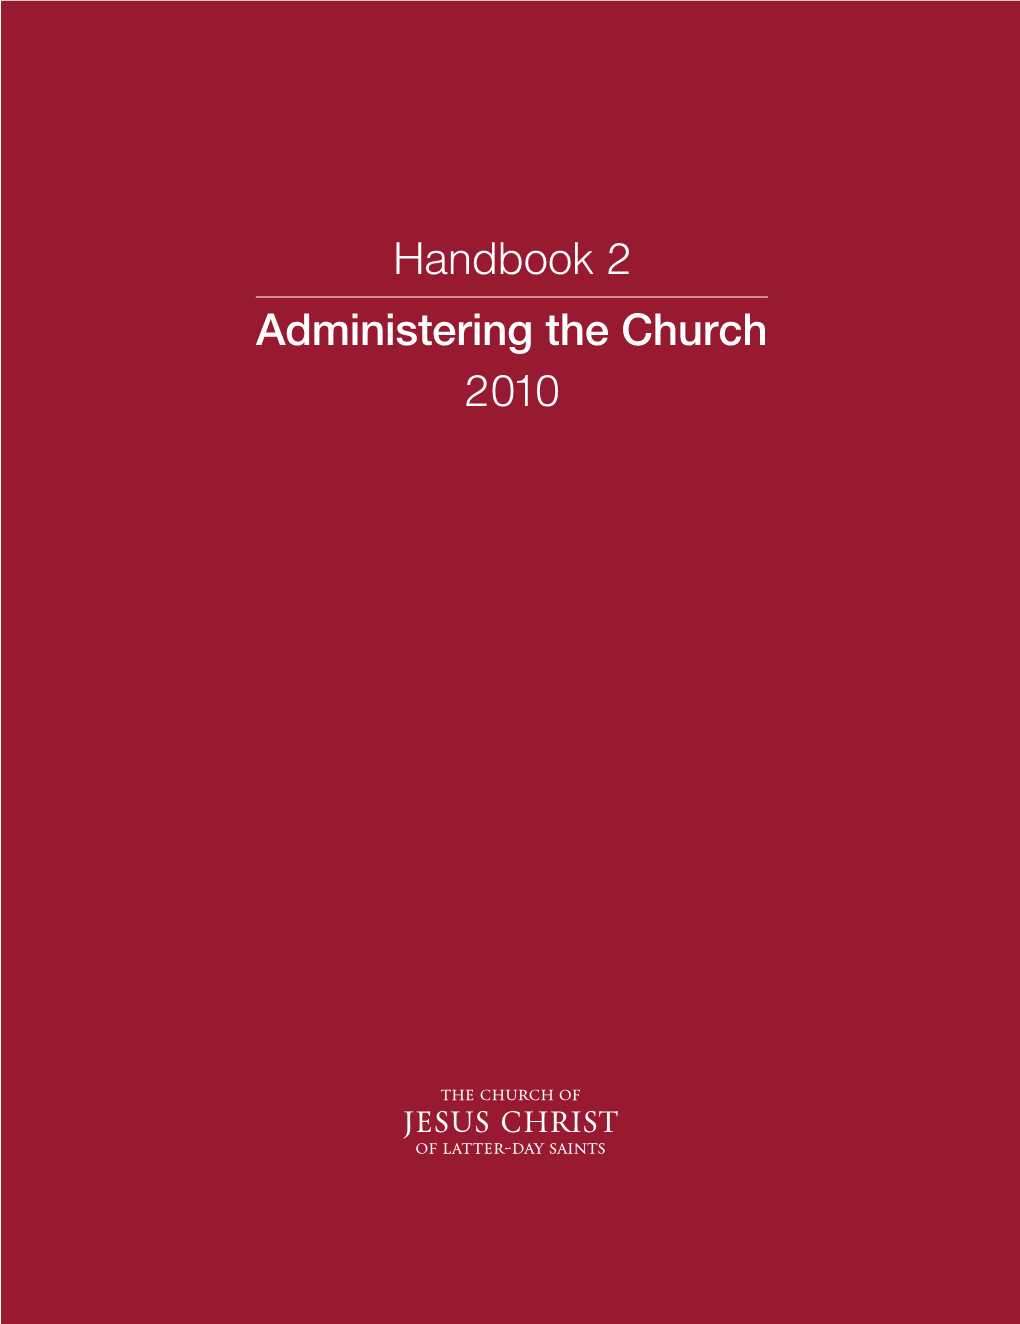 Handbook 2: Administering the Church (2010)